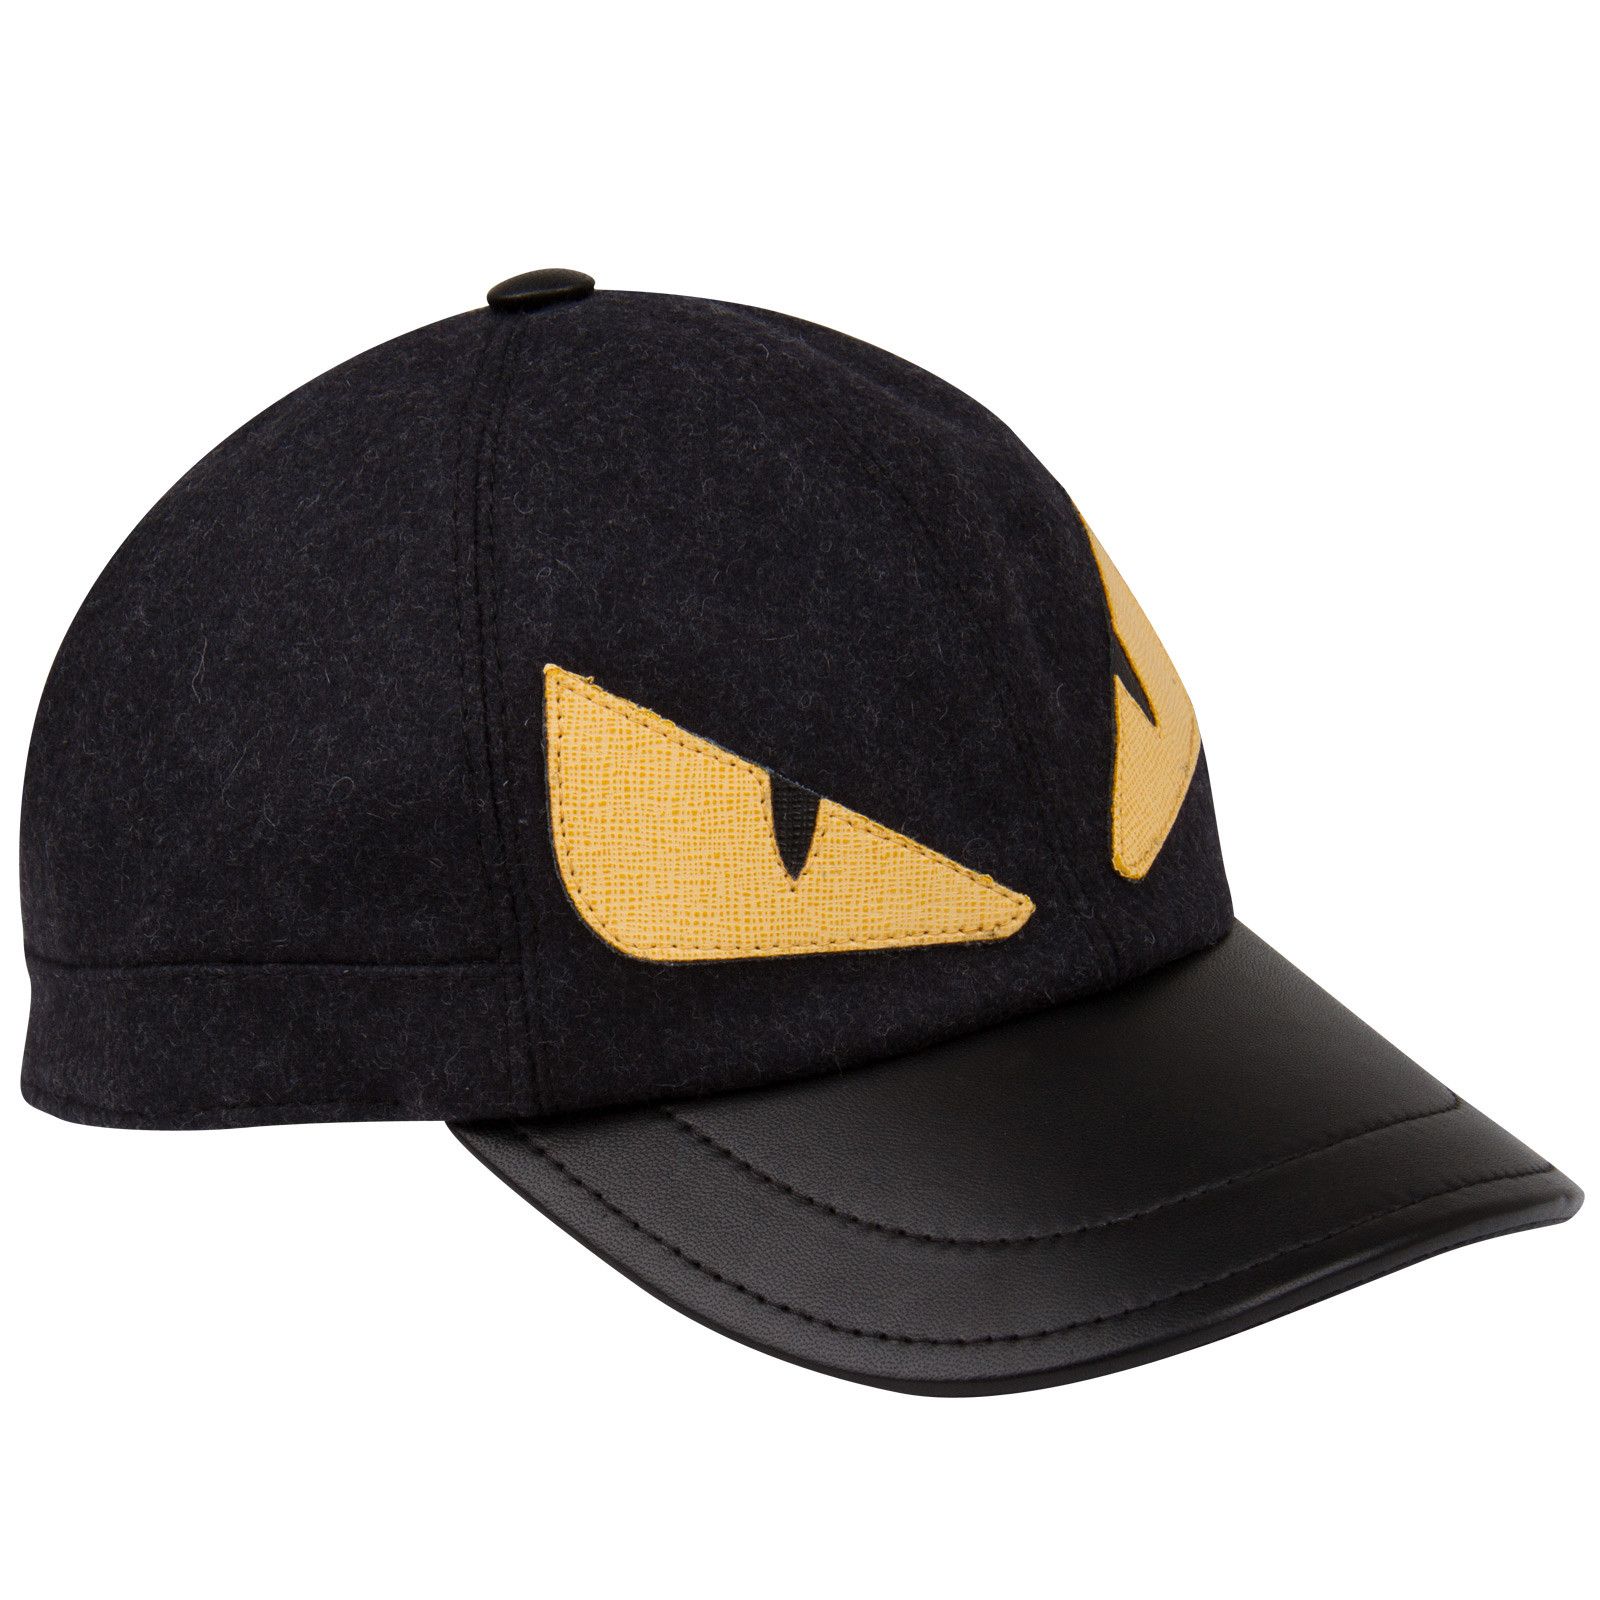 Boys Grey&Black Hat With Yellow Eye Logo - CÉMAROSE | Children's Fashion Store - 1